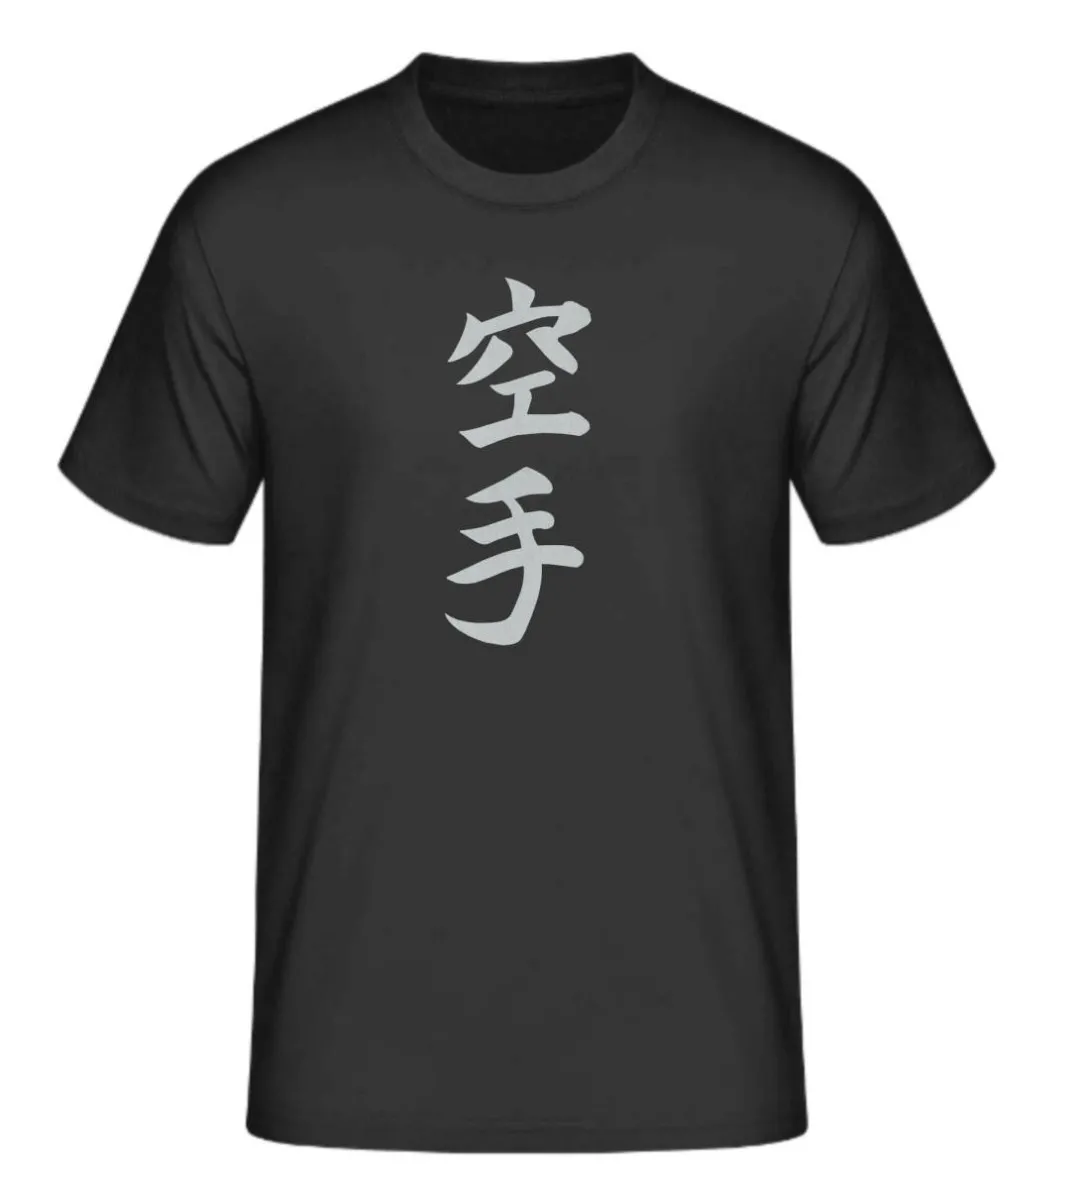 T-shirt noir avec kanji argente Karate, judo, aukido, taekwondo